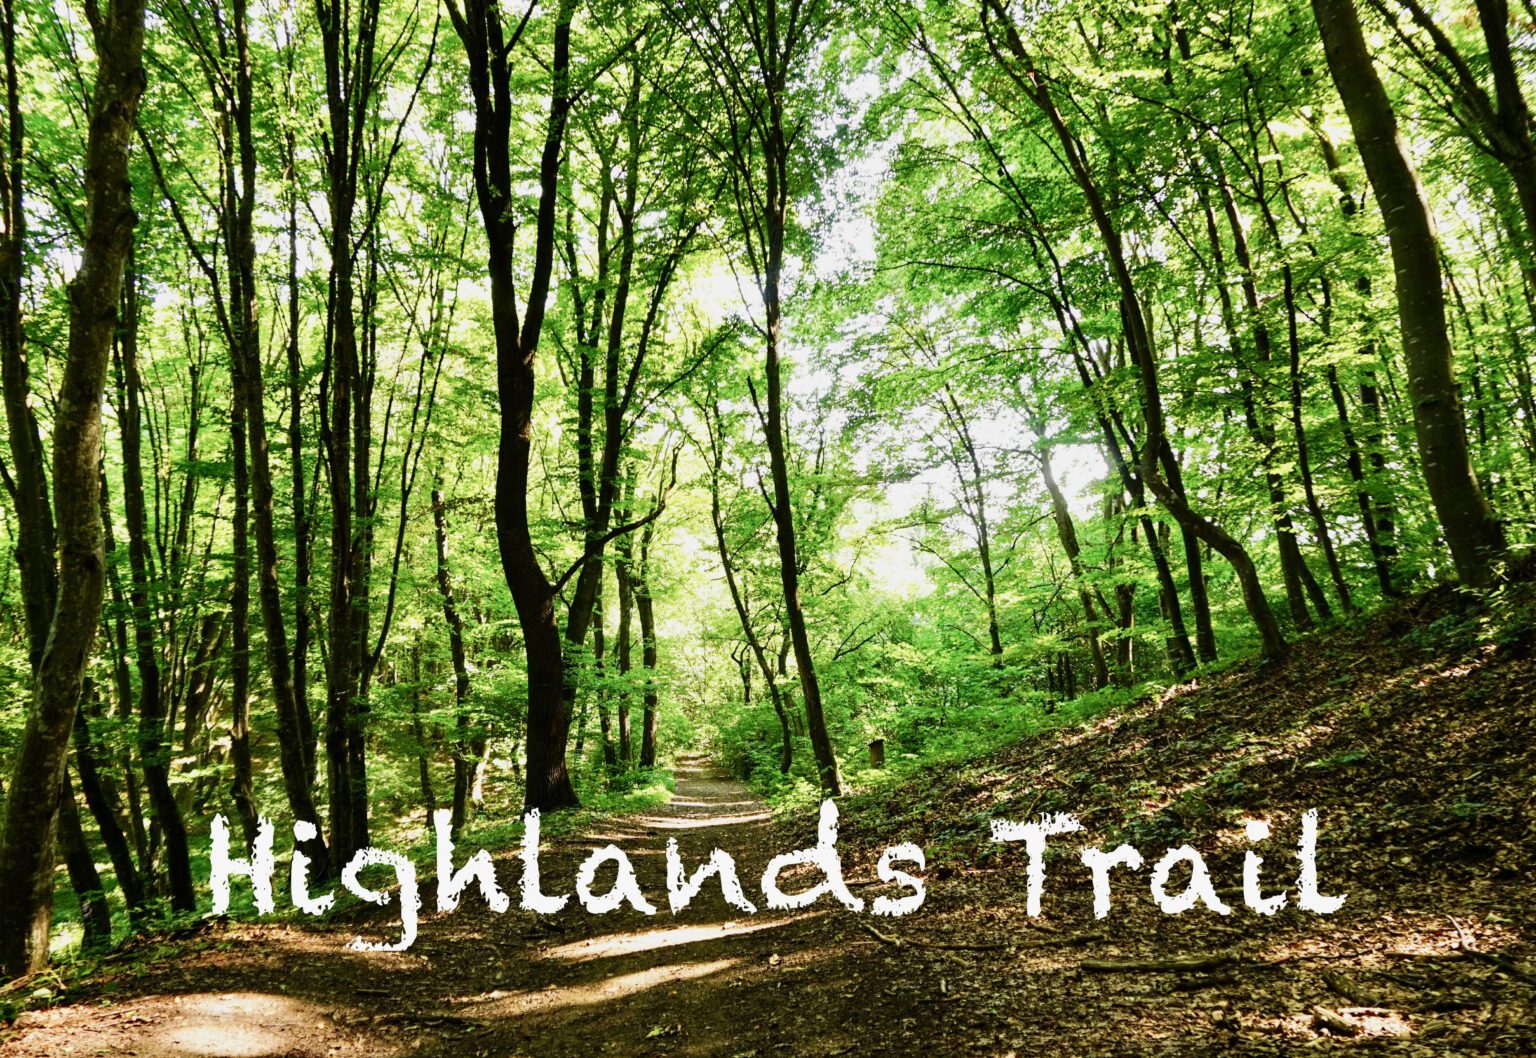 Highlands Trail